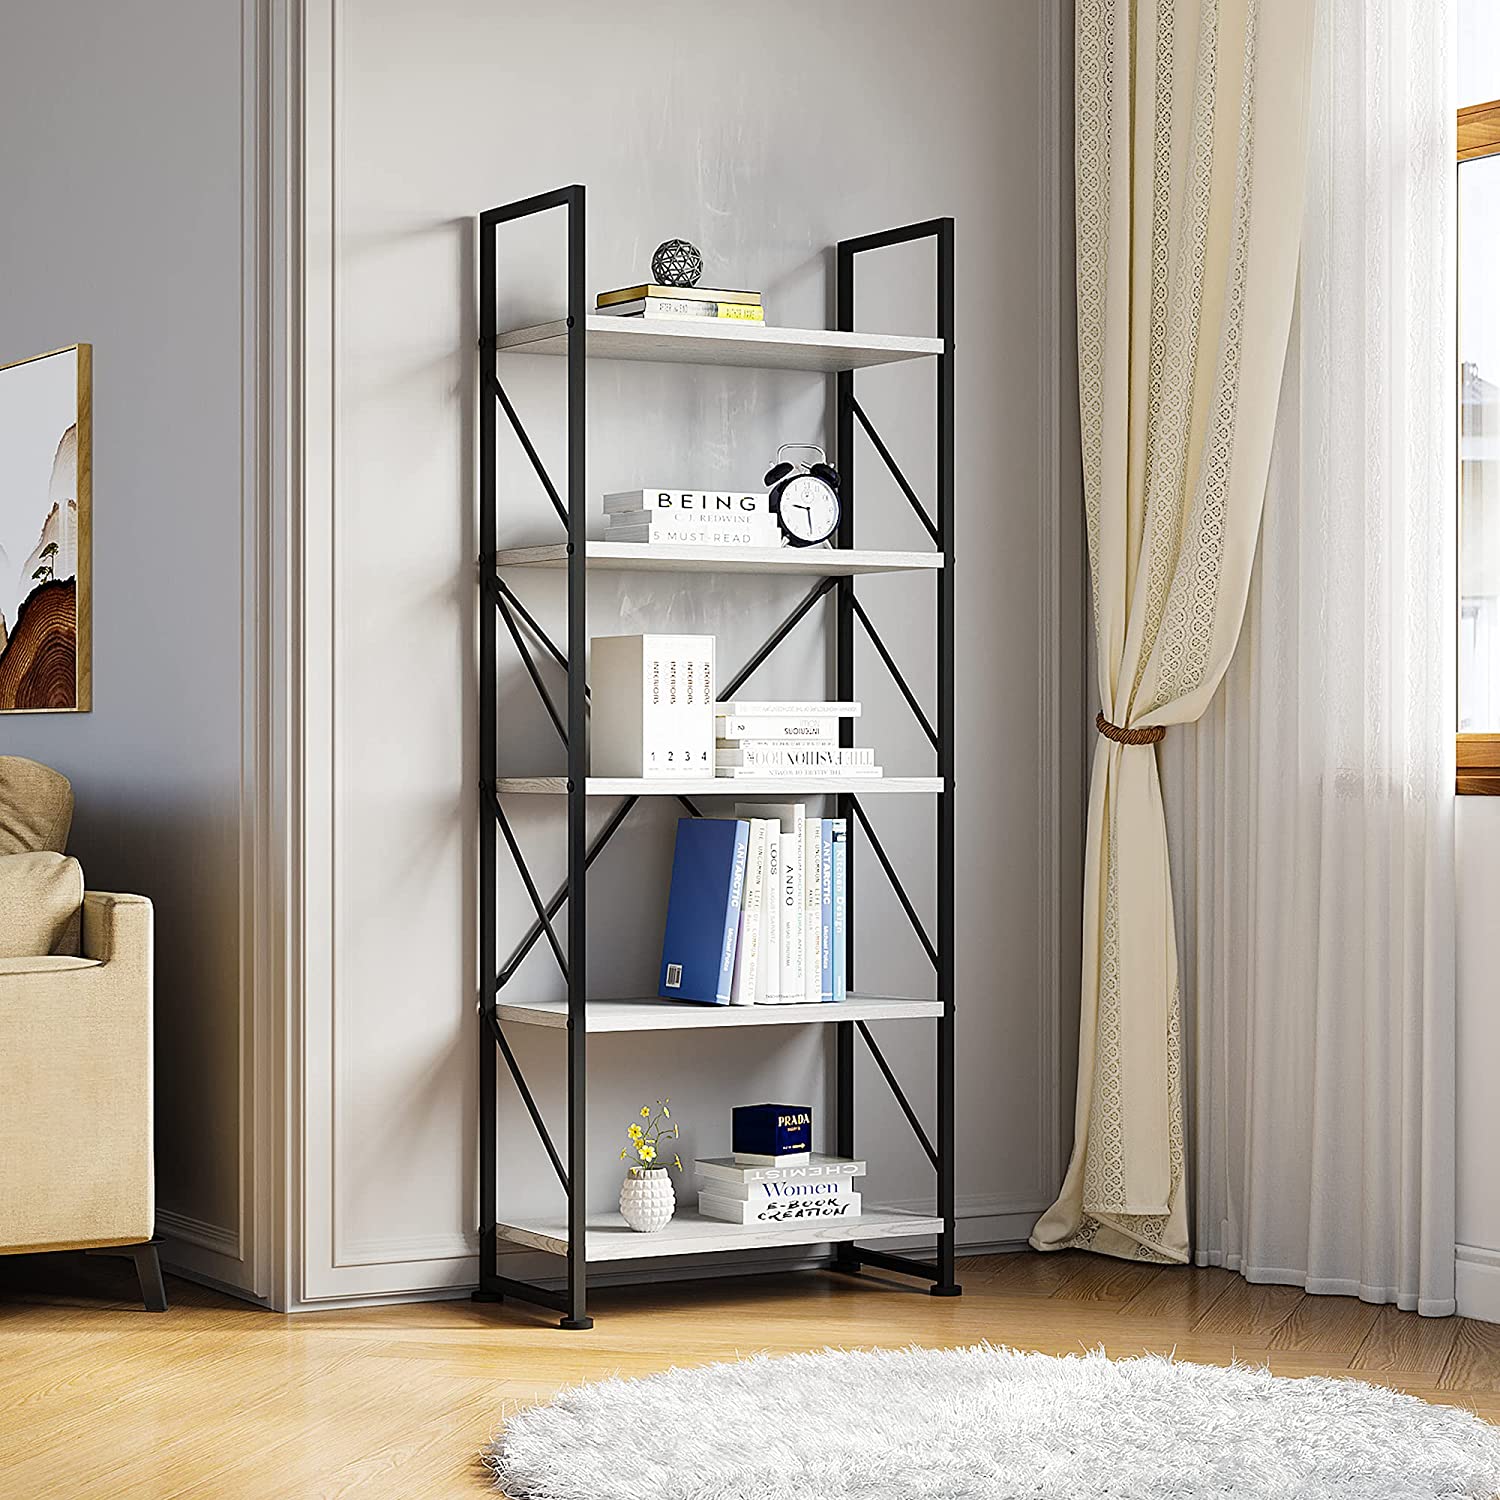 5 Tiers Bookshelf, Classically Modern Bookshelf, Book Rack, Storage Rack Shelves in Living Room/Home/Office, Books Holder Organizer for Books/Movies – White Featured Image